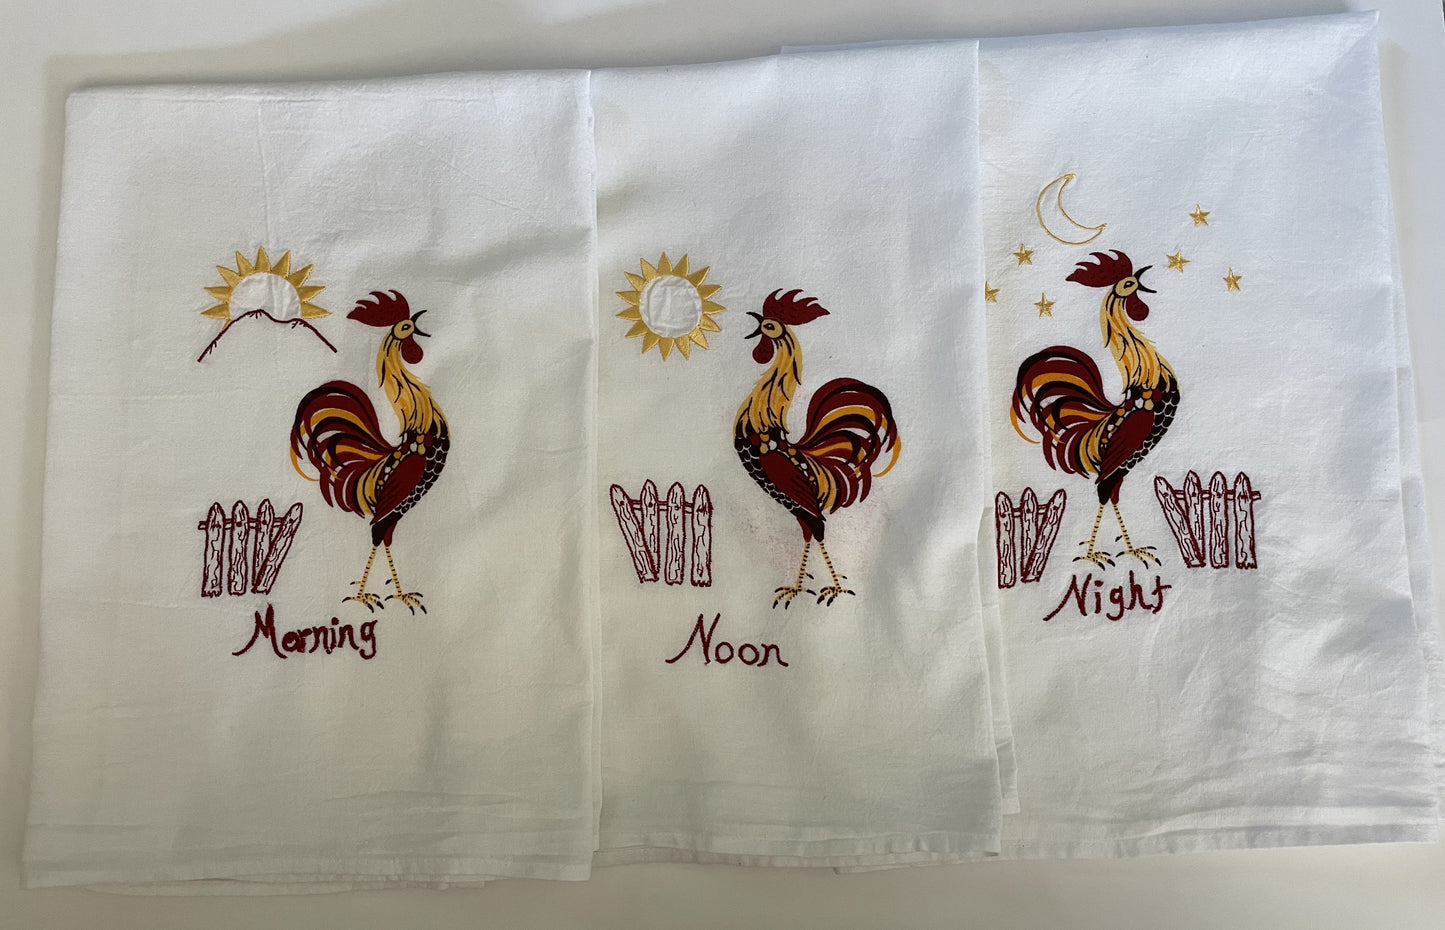 Vintage Rooster Flour Sack Tea Towels (Morning, Noon, Night)